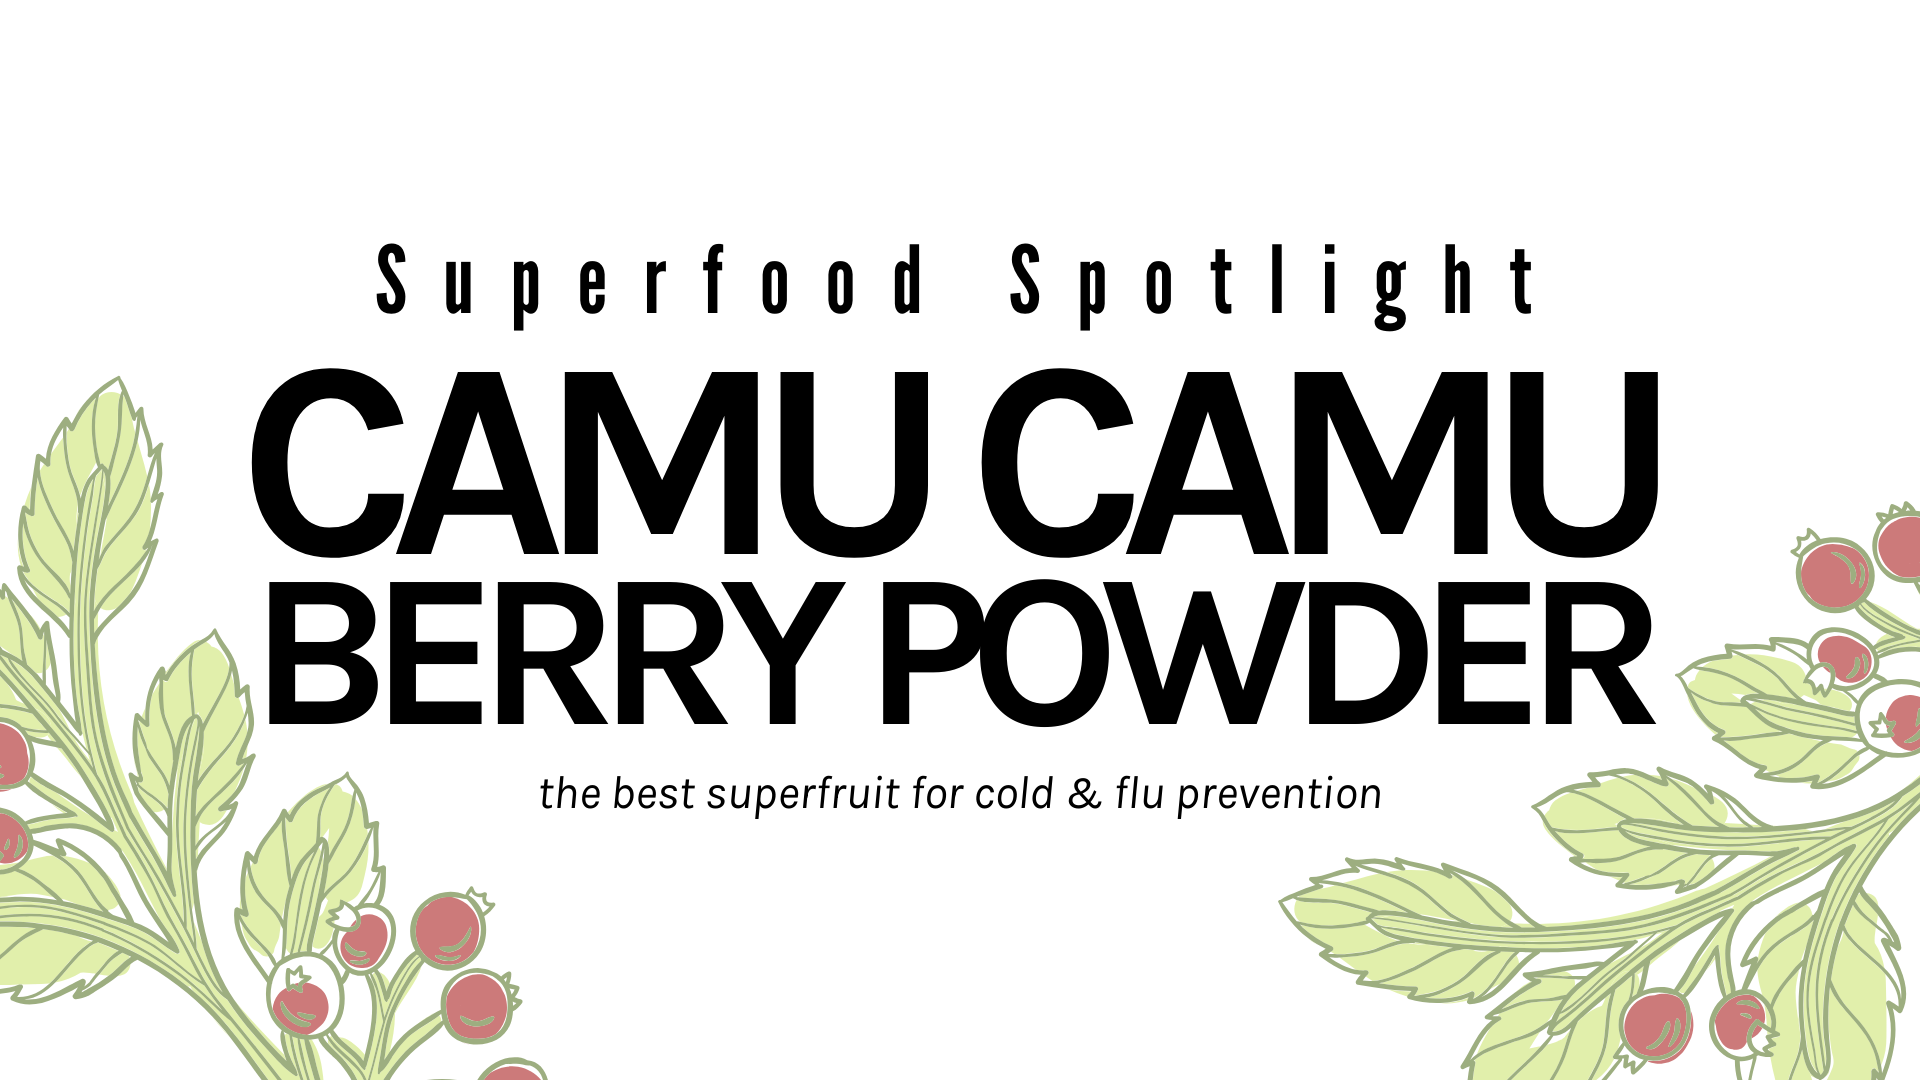 Superfood Spotlight: Camu Camu Berry Powder